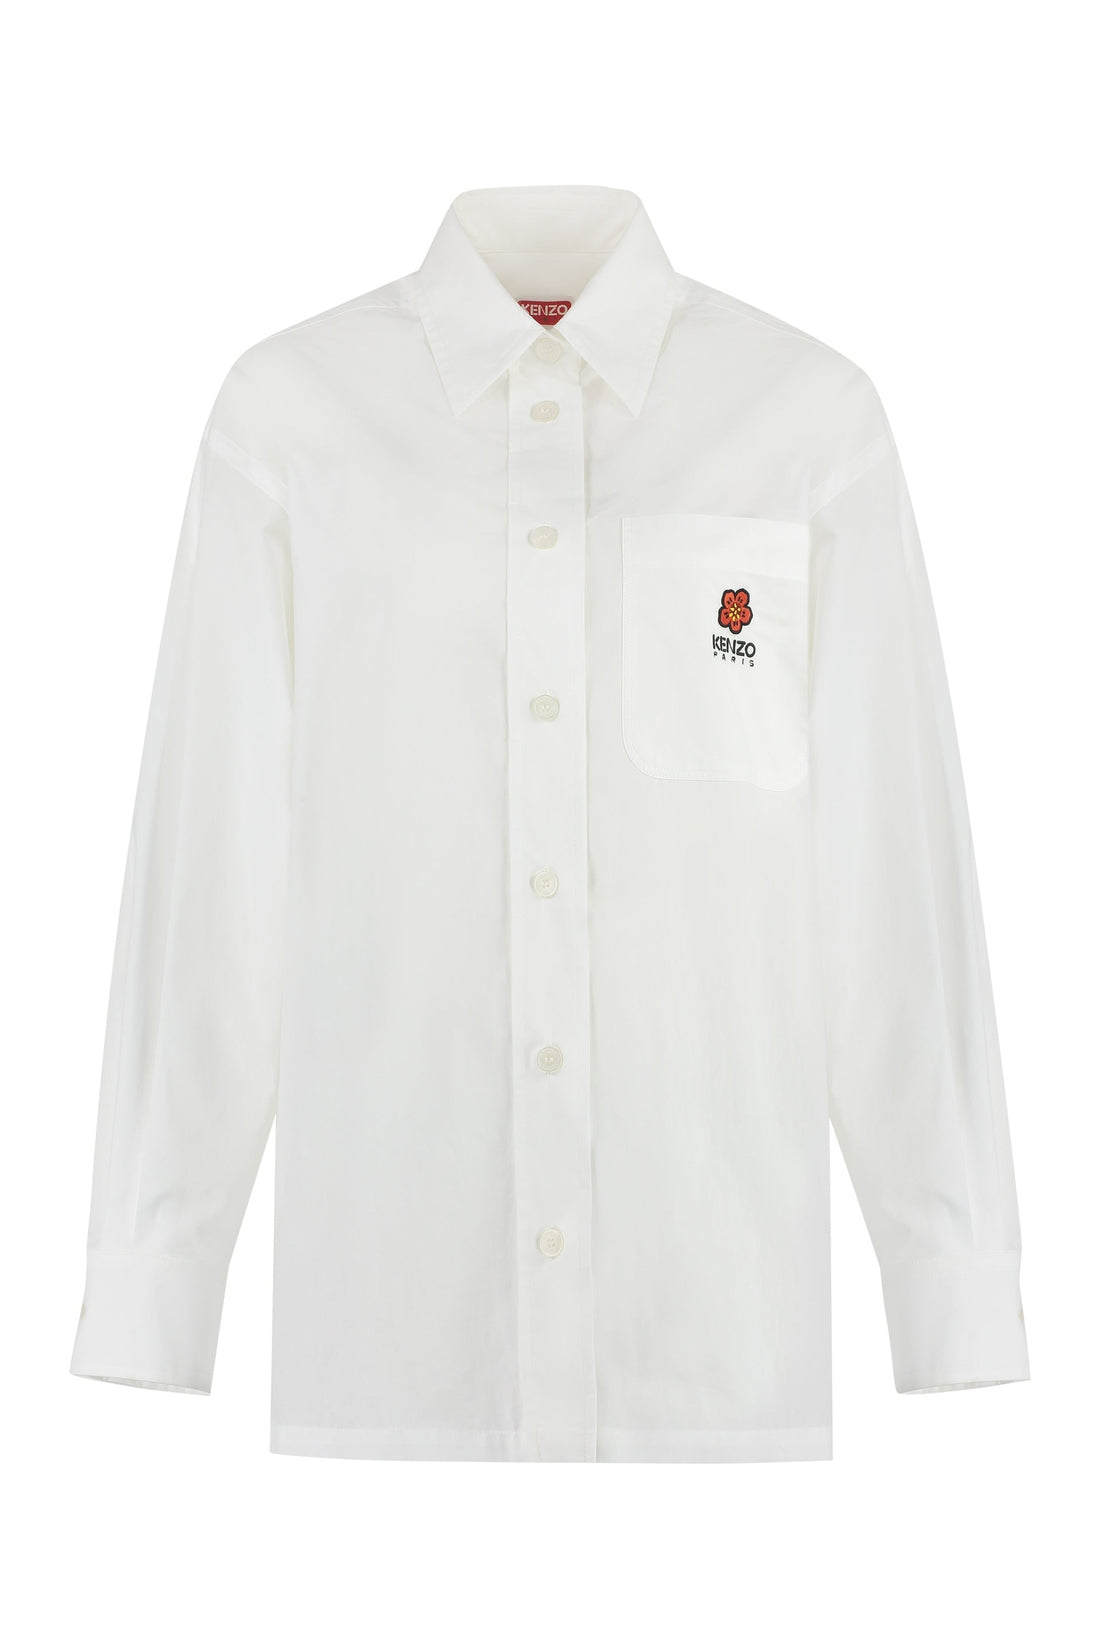 Kenzo-OUTLET-SALE-Oversize shirt-ARCHIVIST